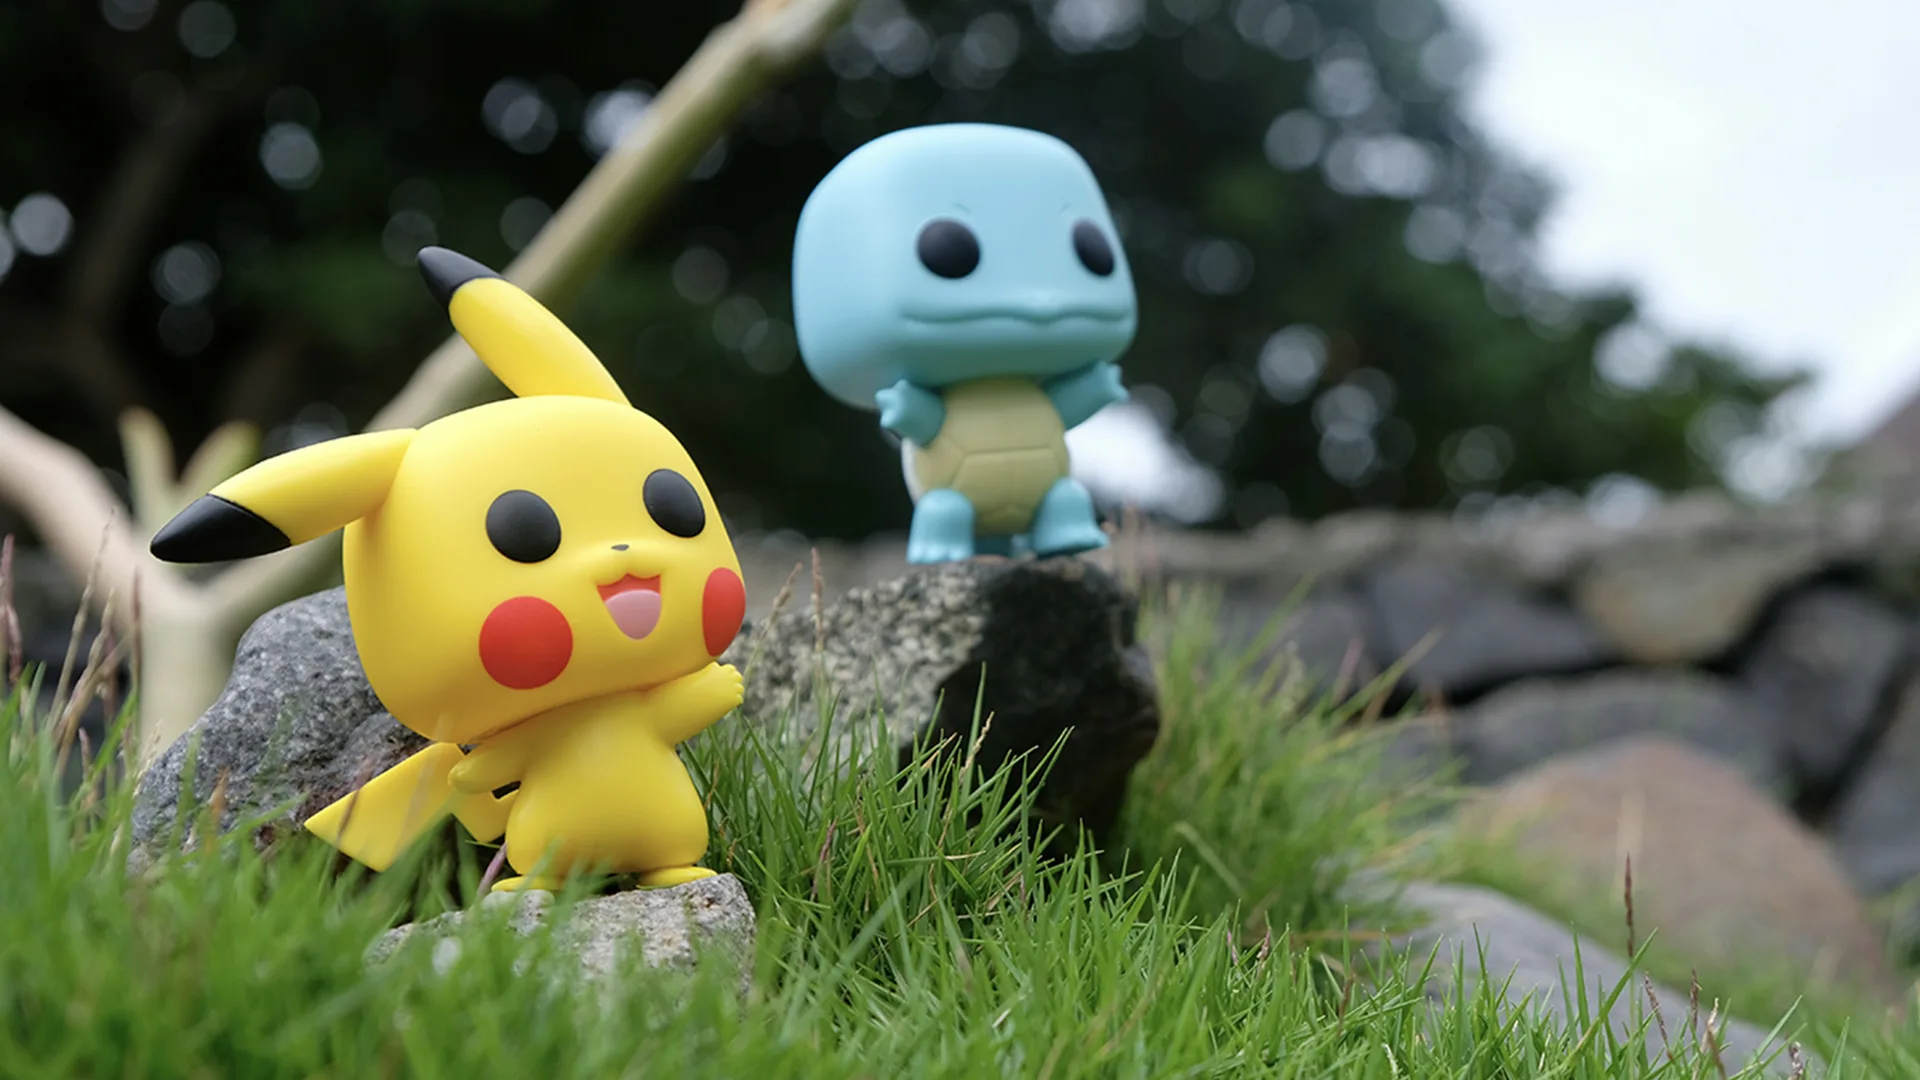 Pokemon creatures in grass